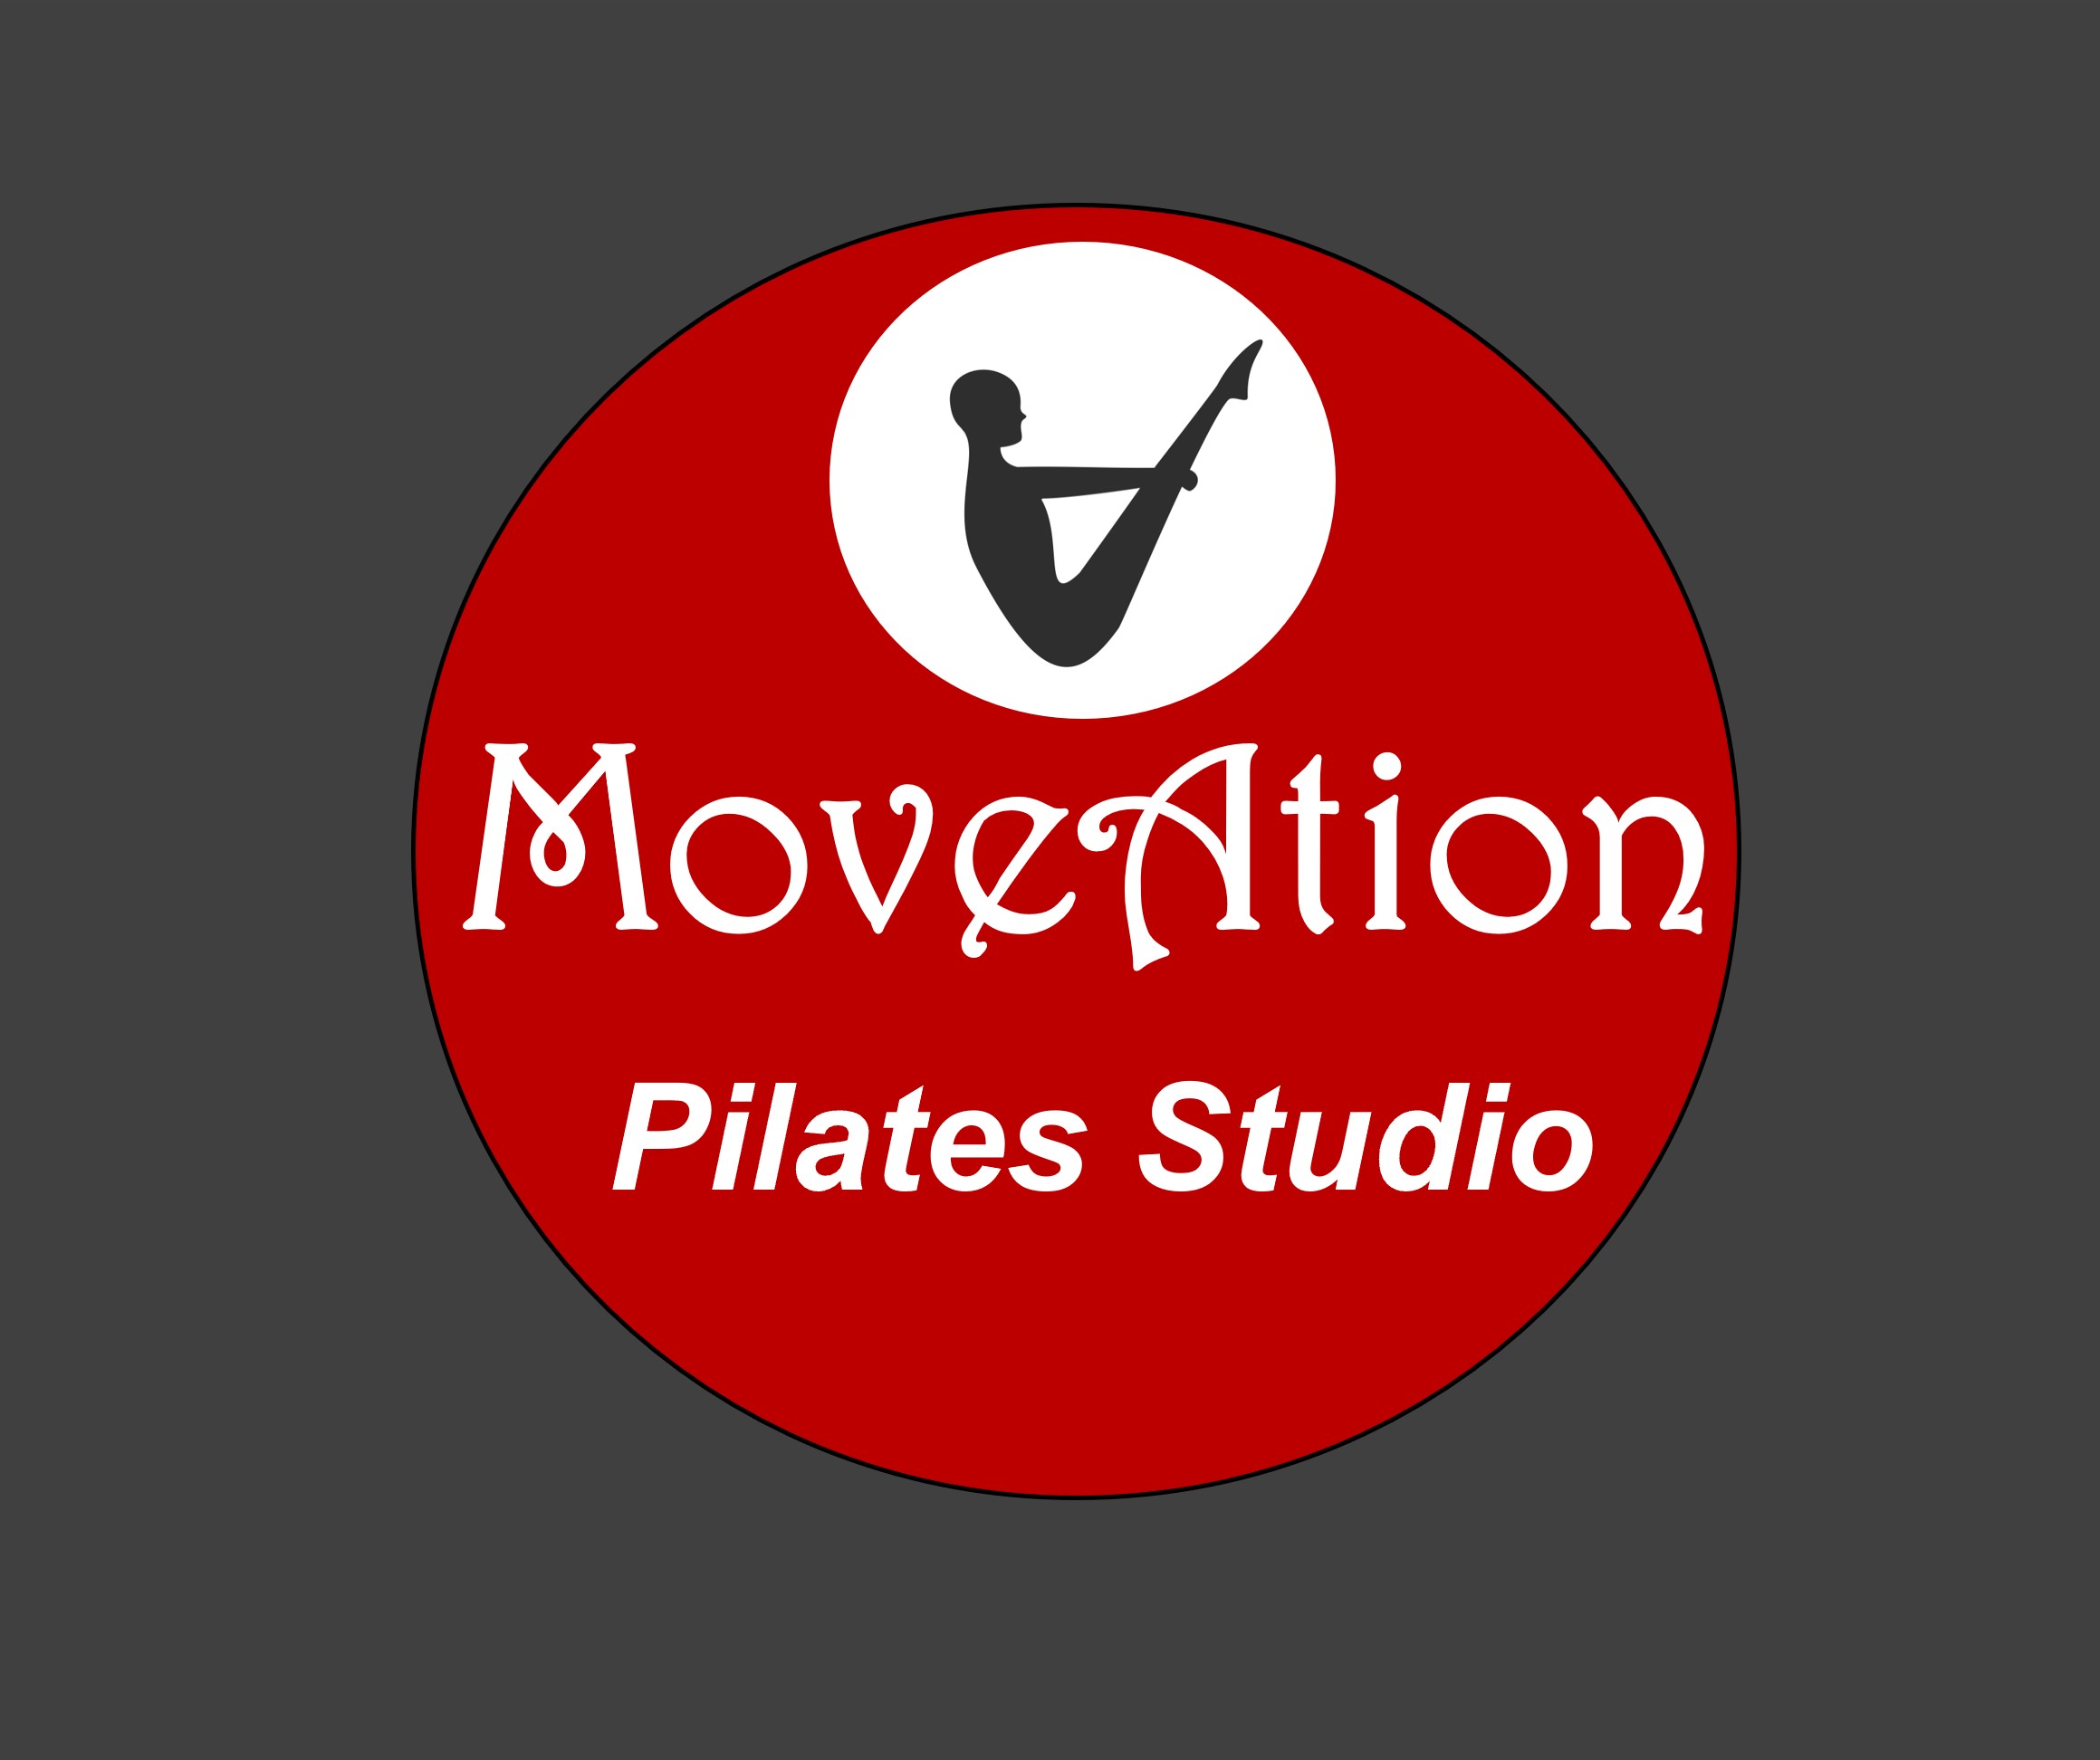 MoveAtion Pilates Studio